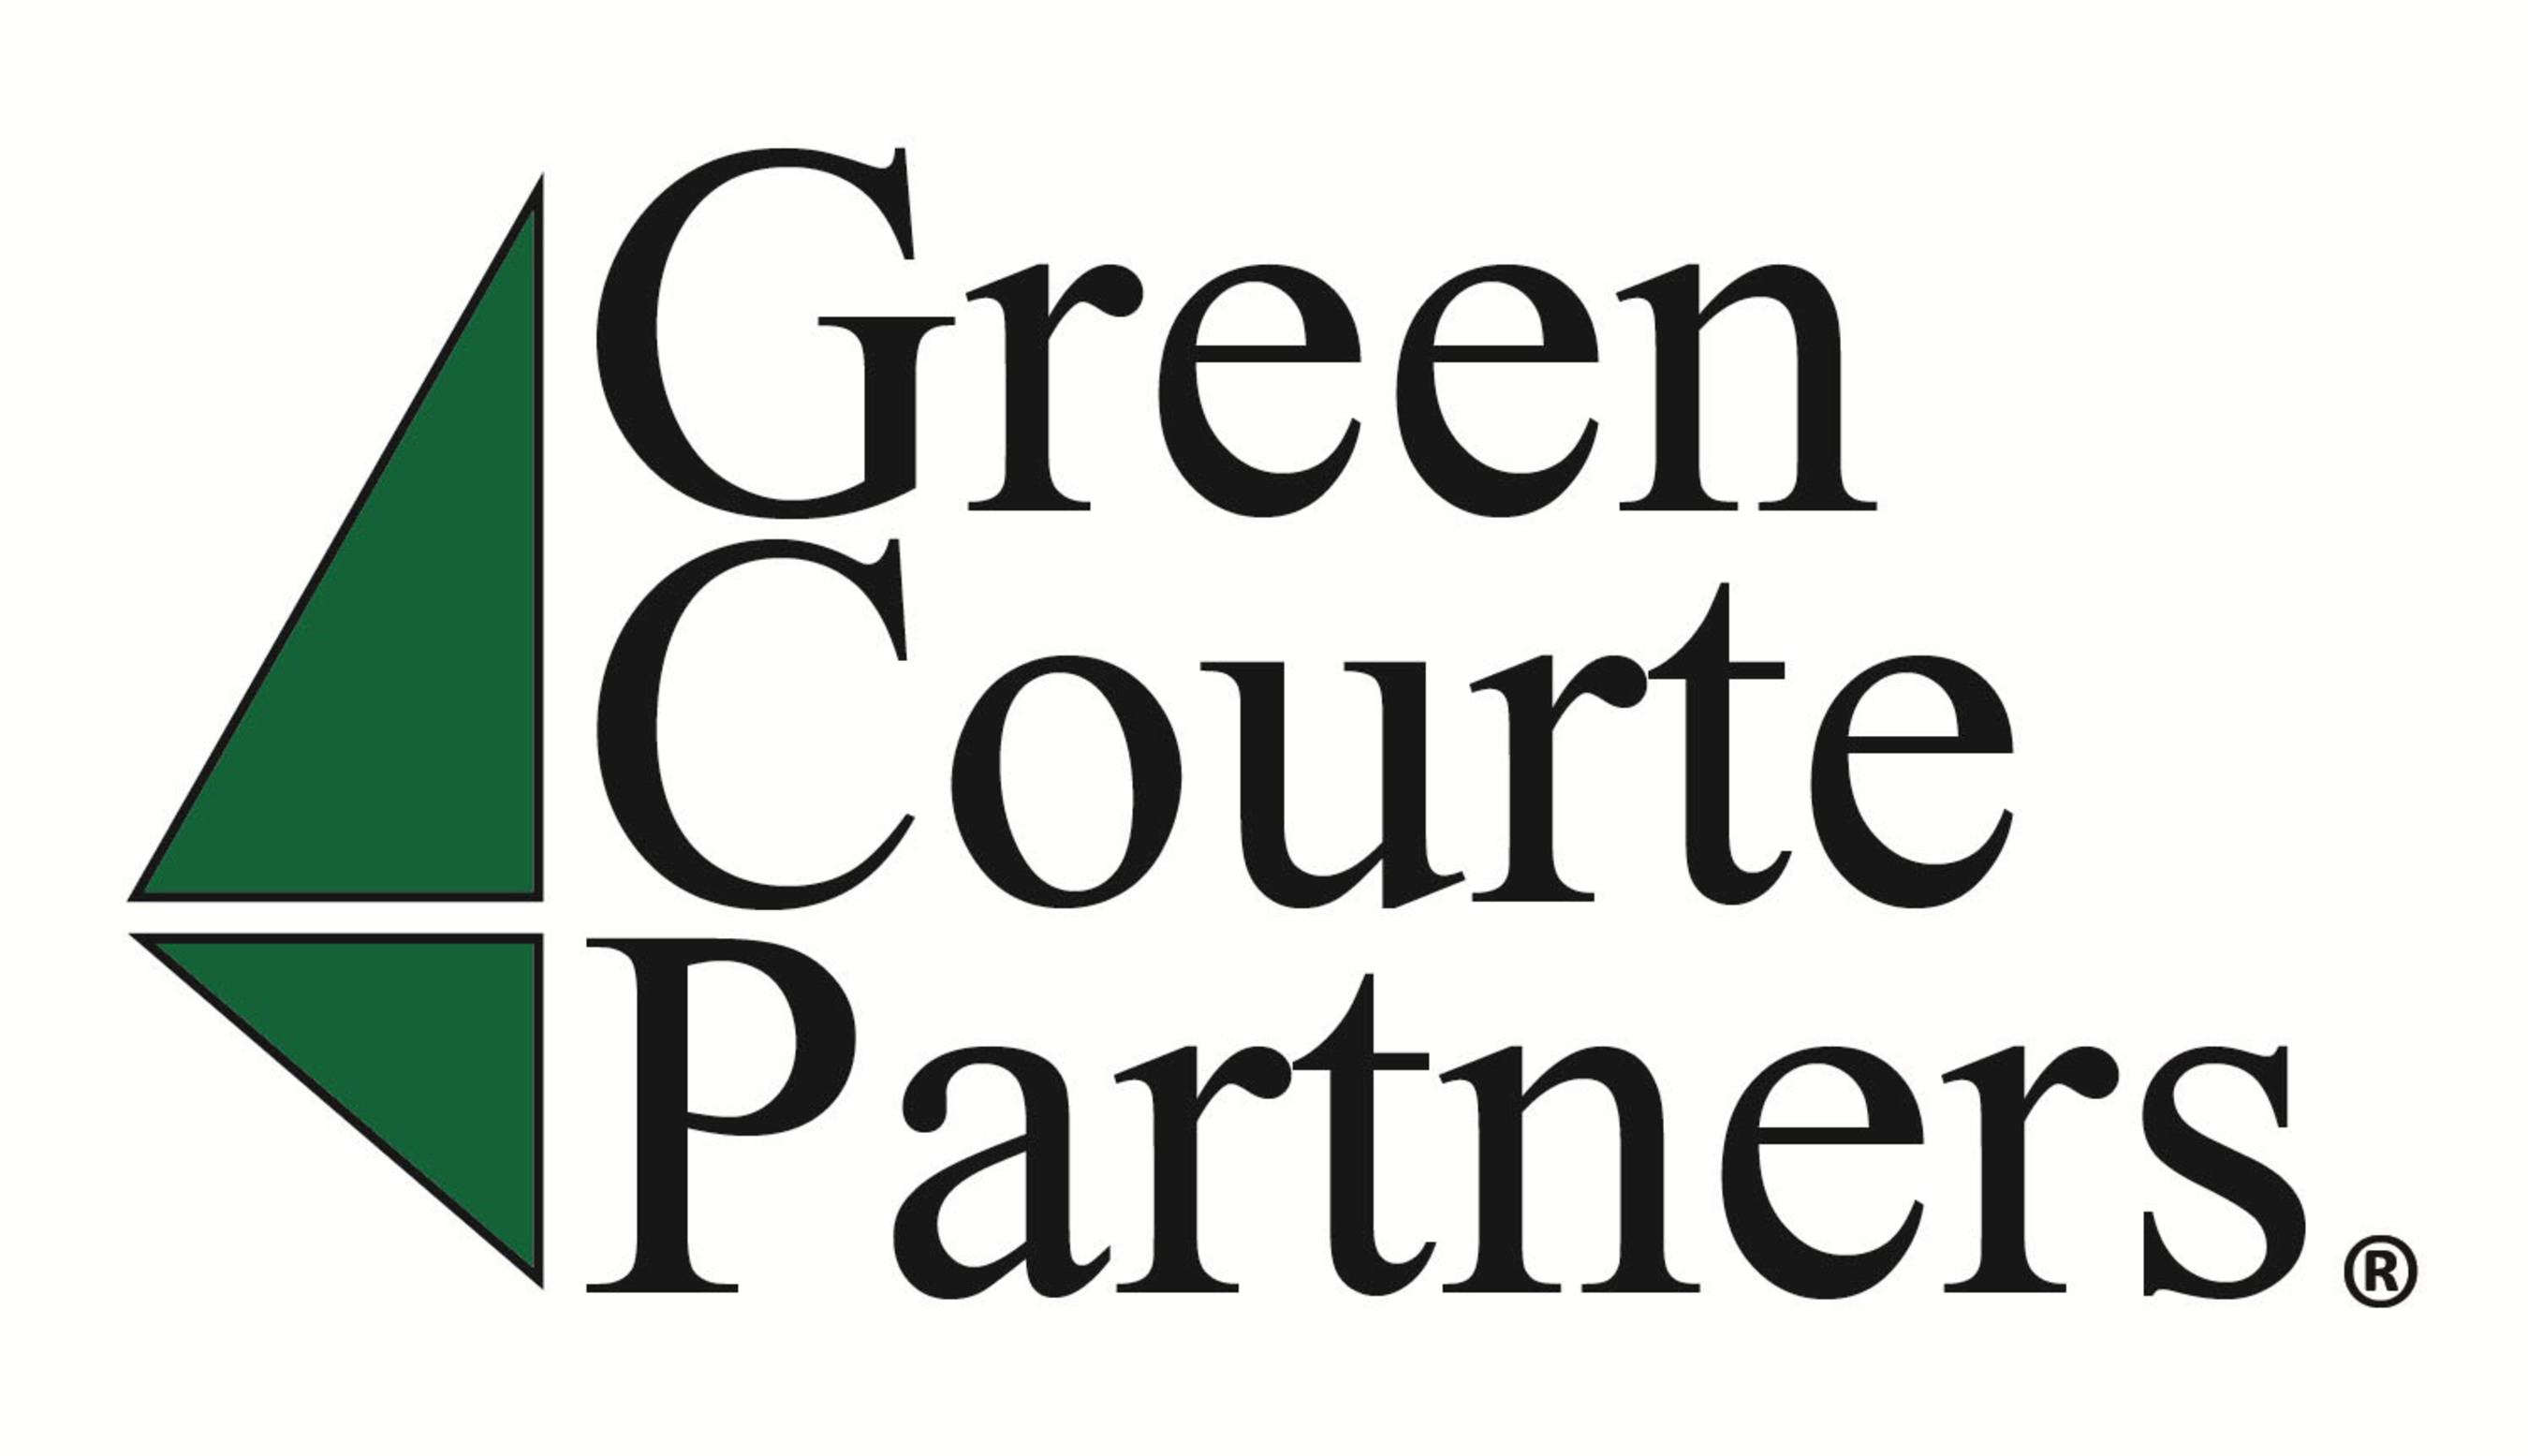 Green Courte Partners, LLC Logo. Please visit www.GreenCourtePartners.com for more information. (PRNewsFoto/Green Courte Partners, LLC)